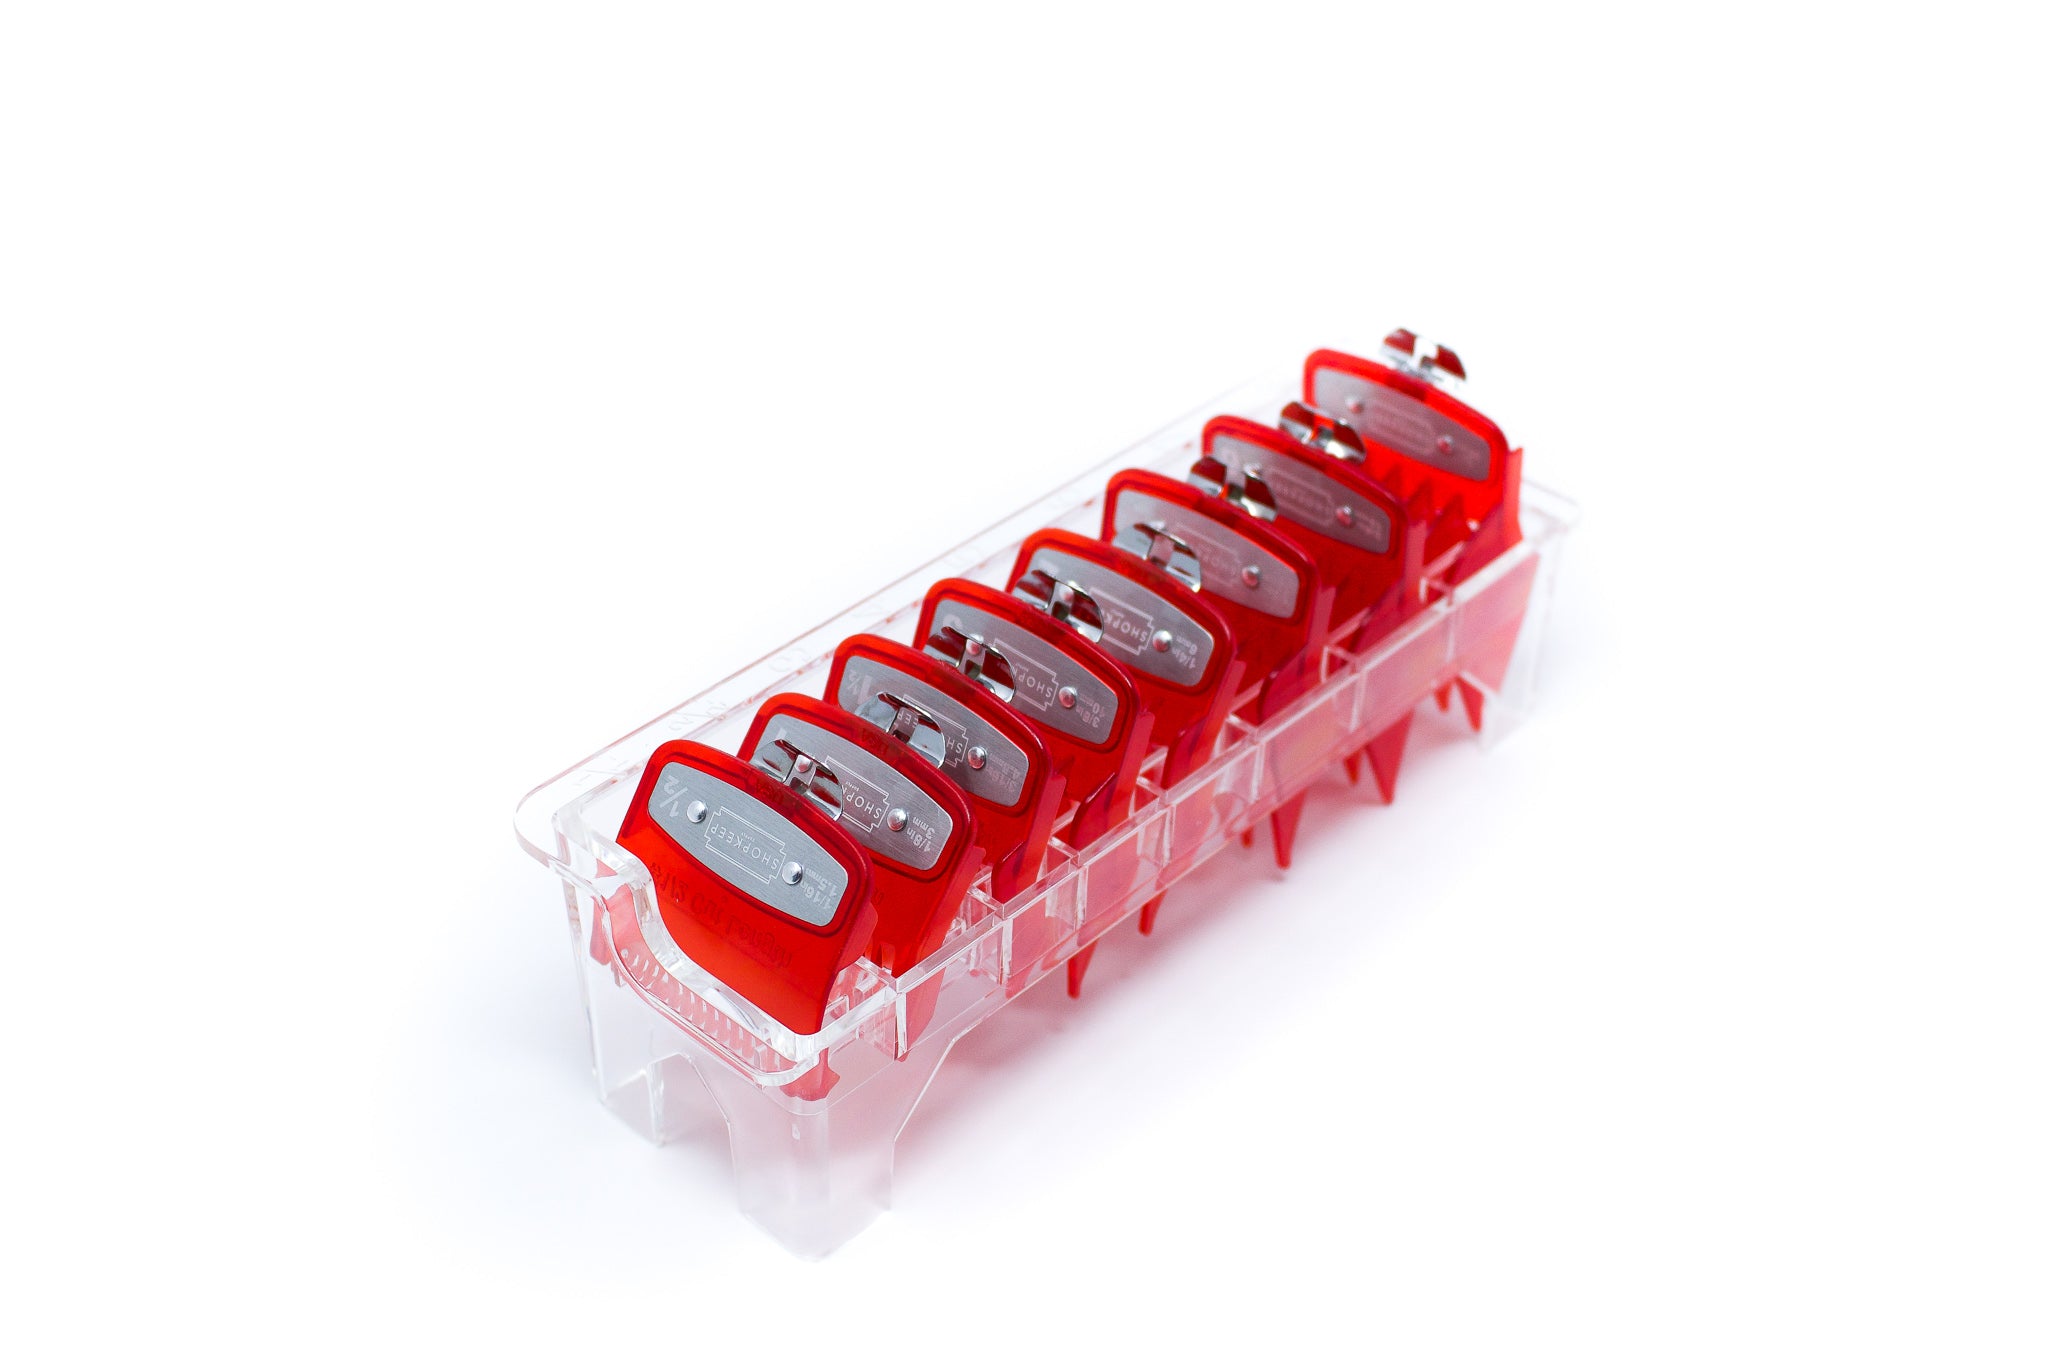 Transparent Series - Red Premium Guard Comb Set